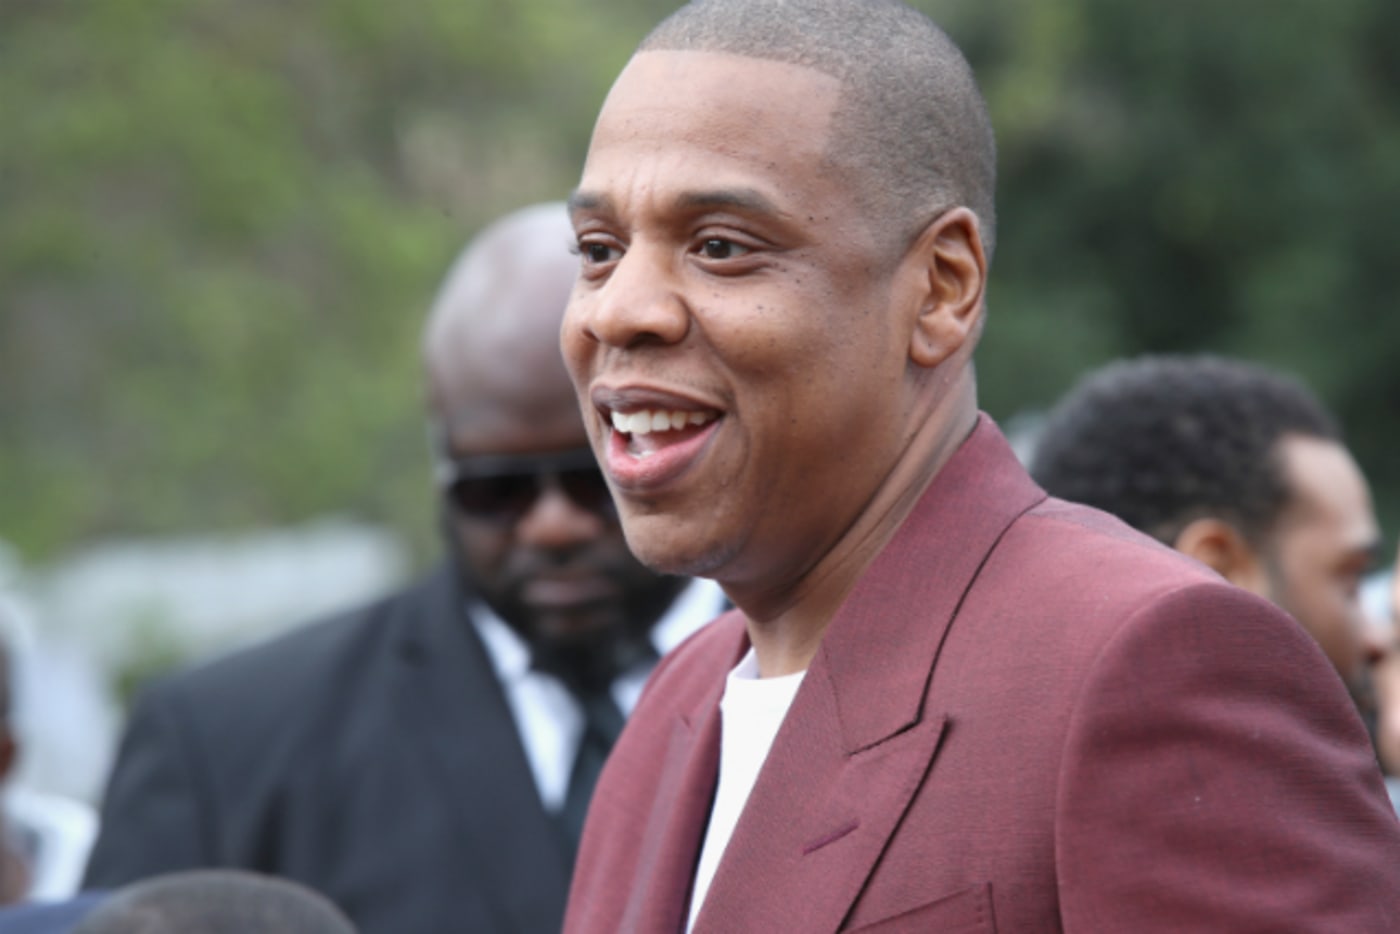 Jay Z at the 2017 Roc Nation Pre Grammy Brunch